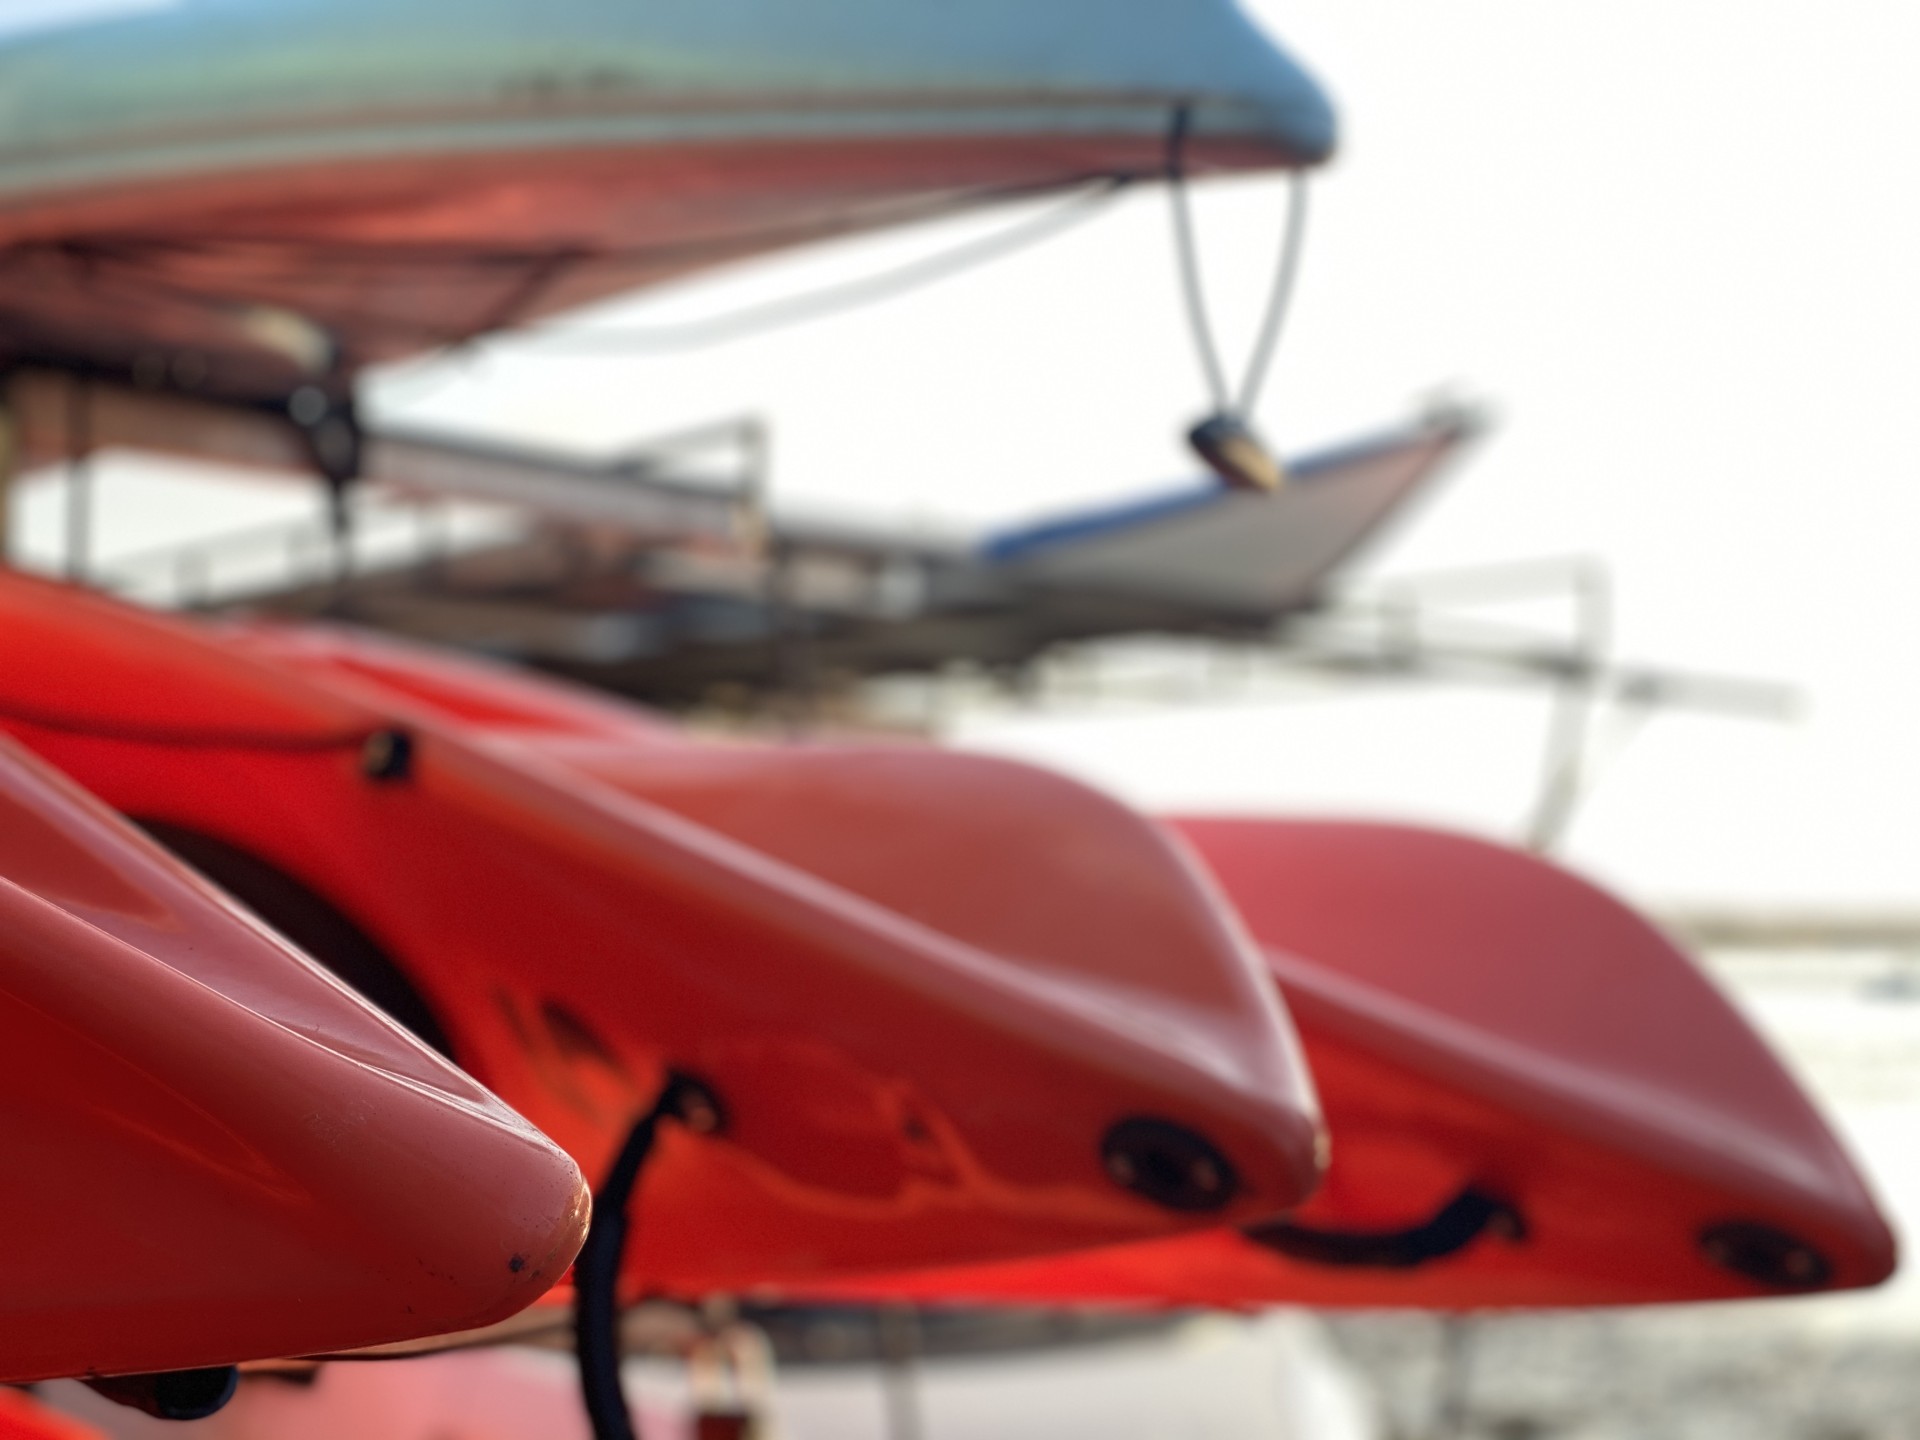 Orange sea kayaks on a trailer with NOMAD Sea Kayaking.